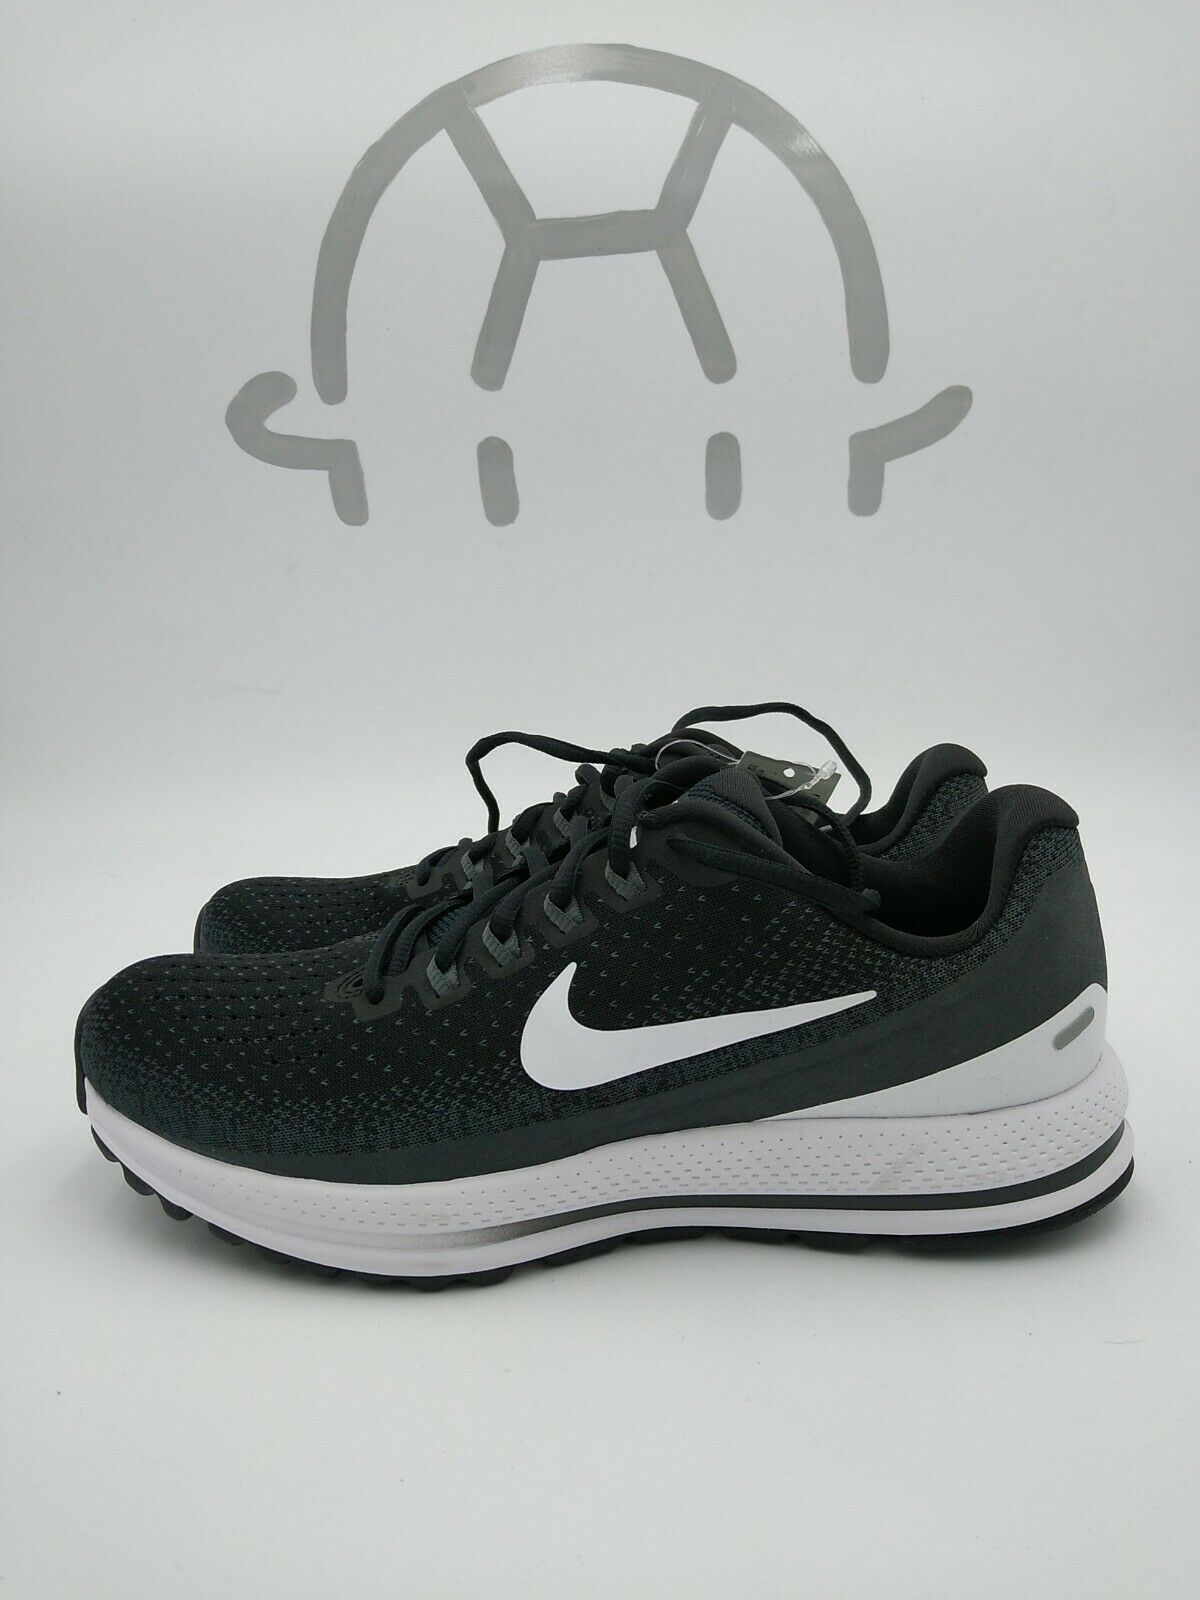 Nike Zoom Vomero 13 Womens Athletic Shoes Running Walking Training Black Size 10